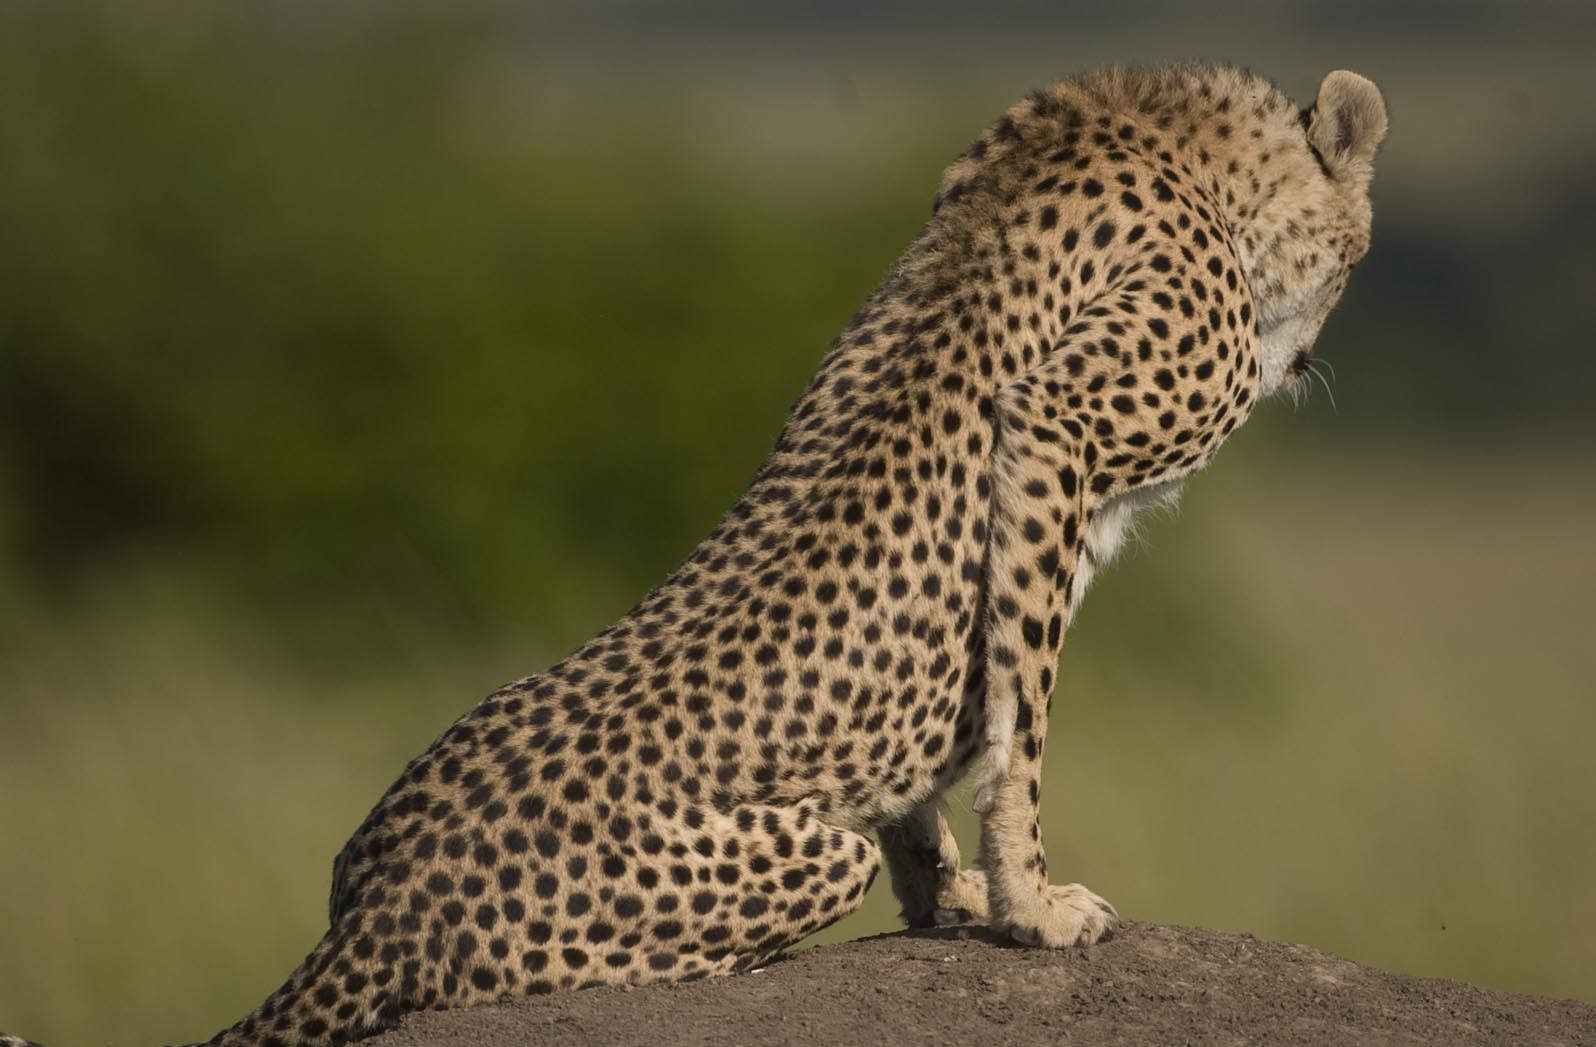 Beautiful photo of a cheetah